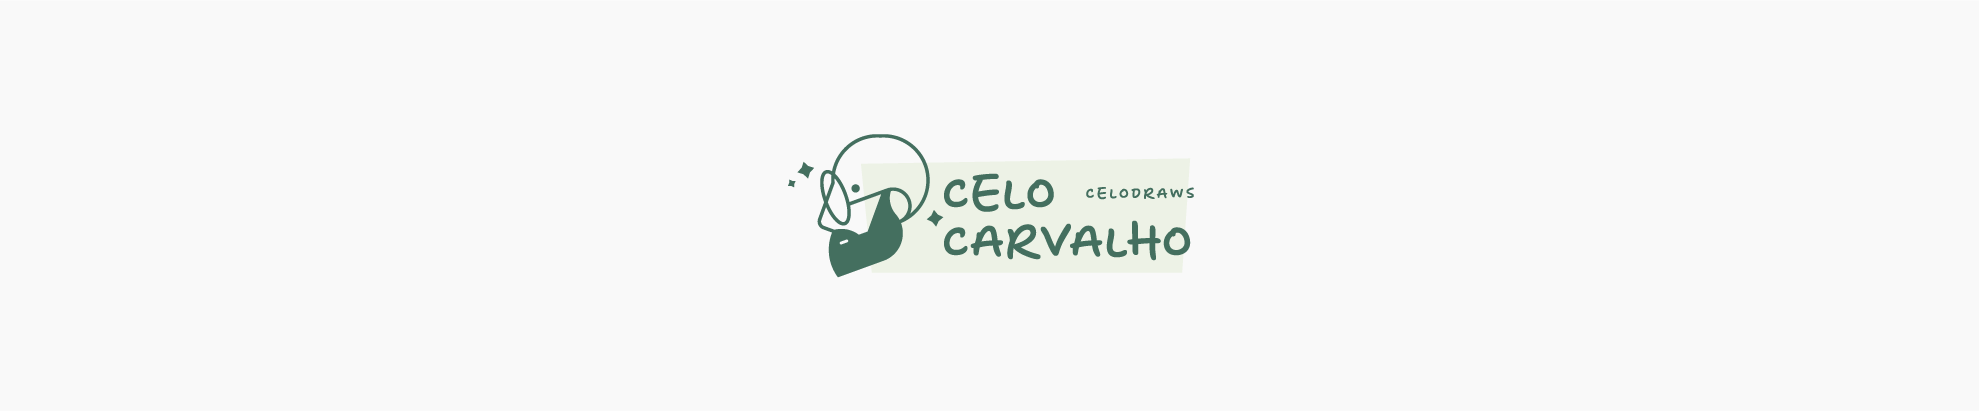 Celo Carvalho's profile banner